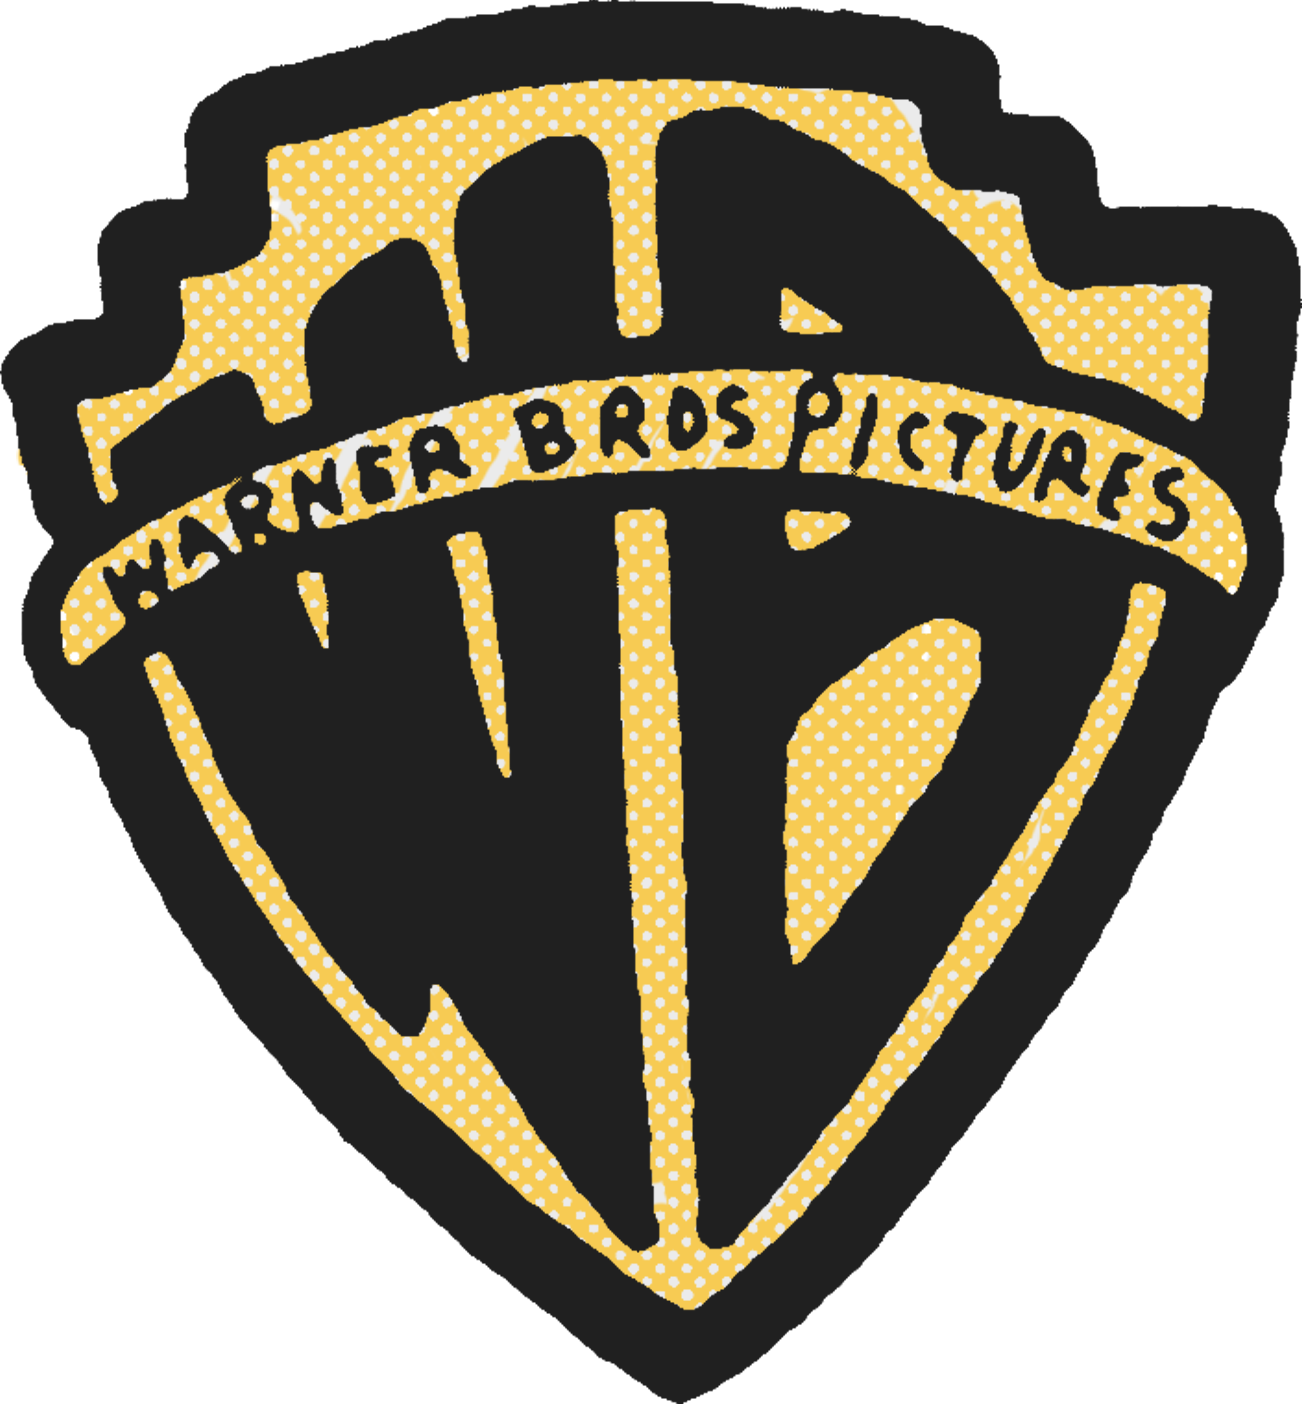 Drawing of Warners Bros. logo